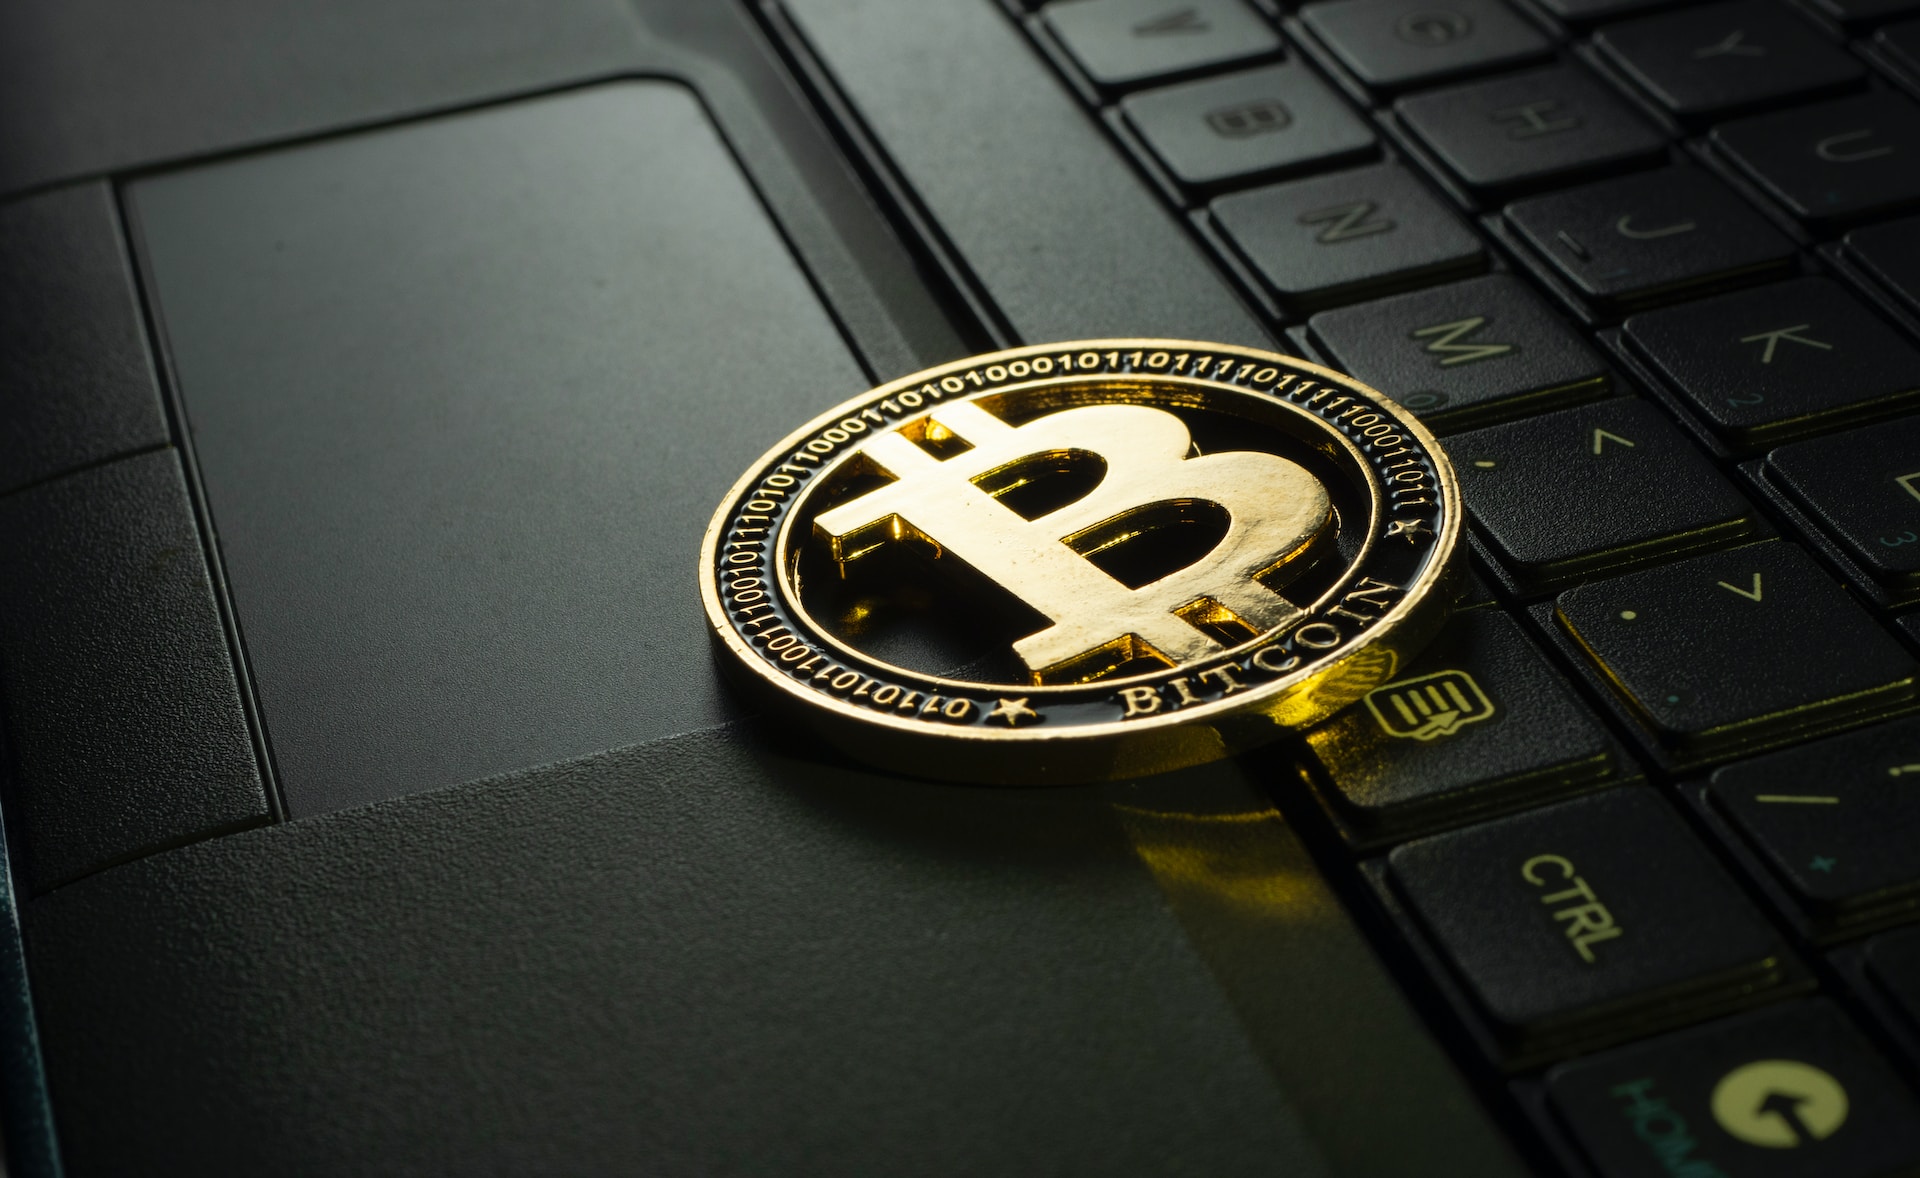 An unknown user deposited 26 bitcoins worth around $1.2 million to the long dormant wallet of Bitcoin creator, Satoshi Nakamoto, last January 5